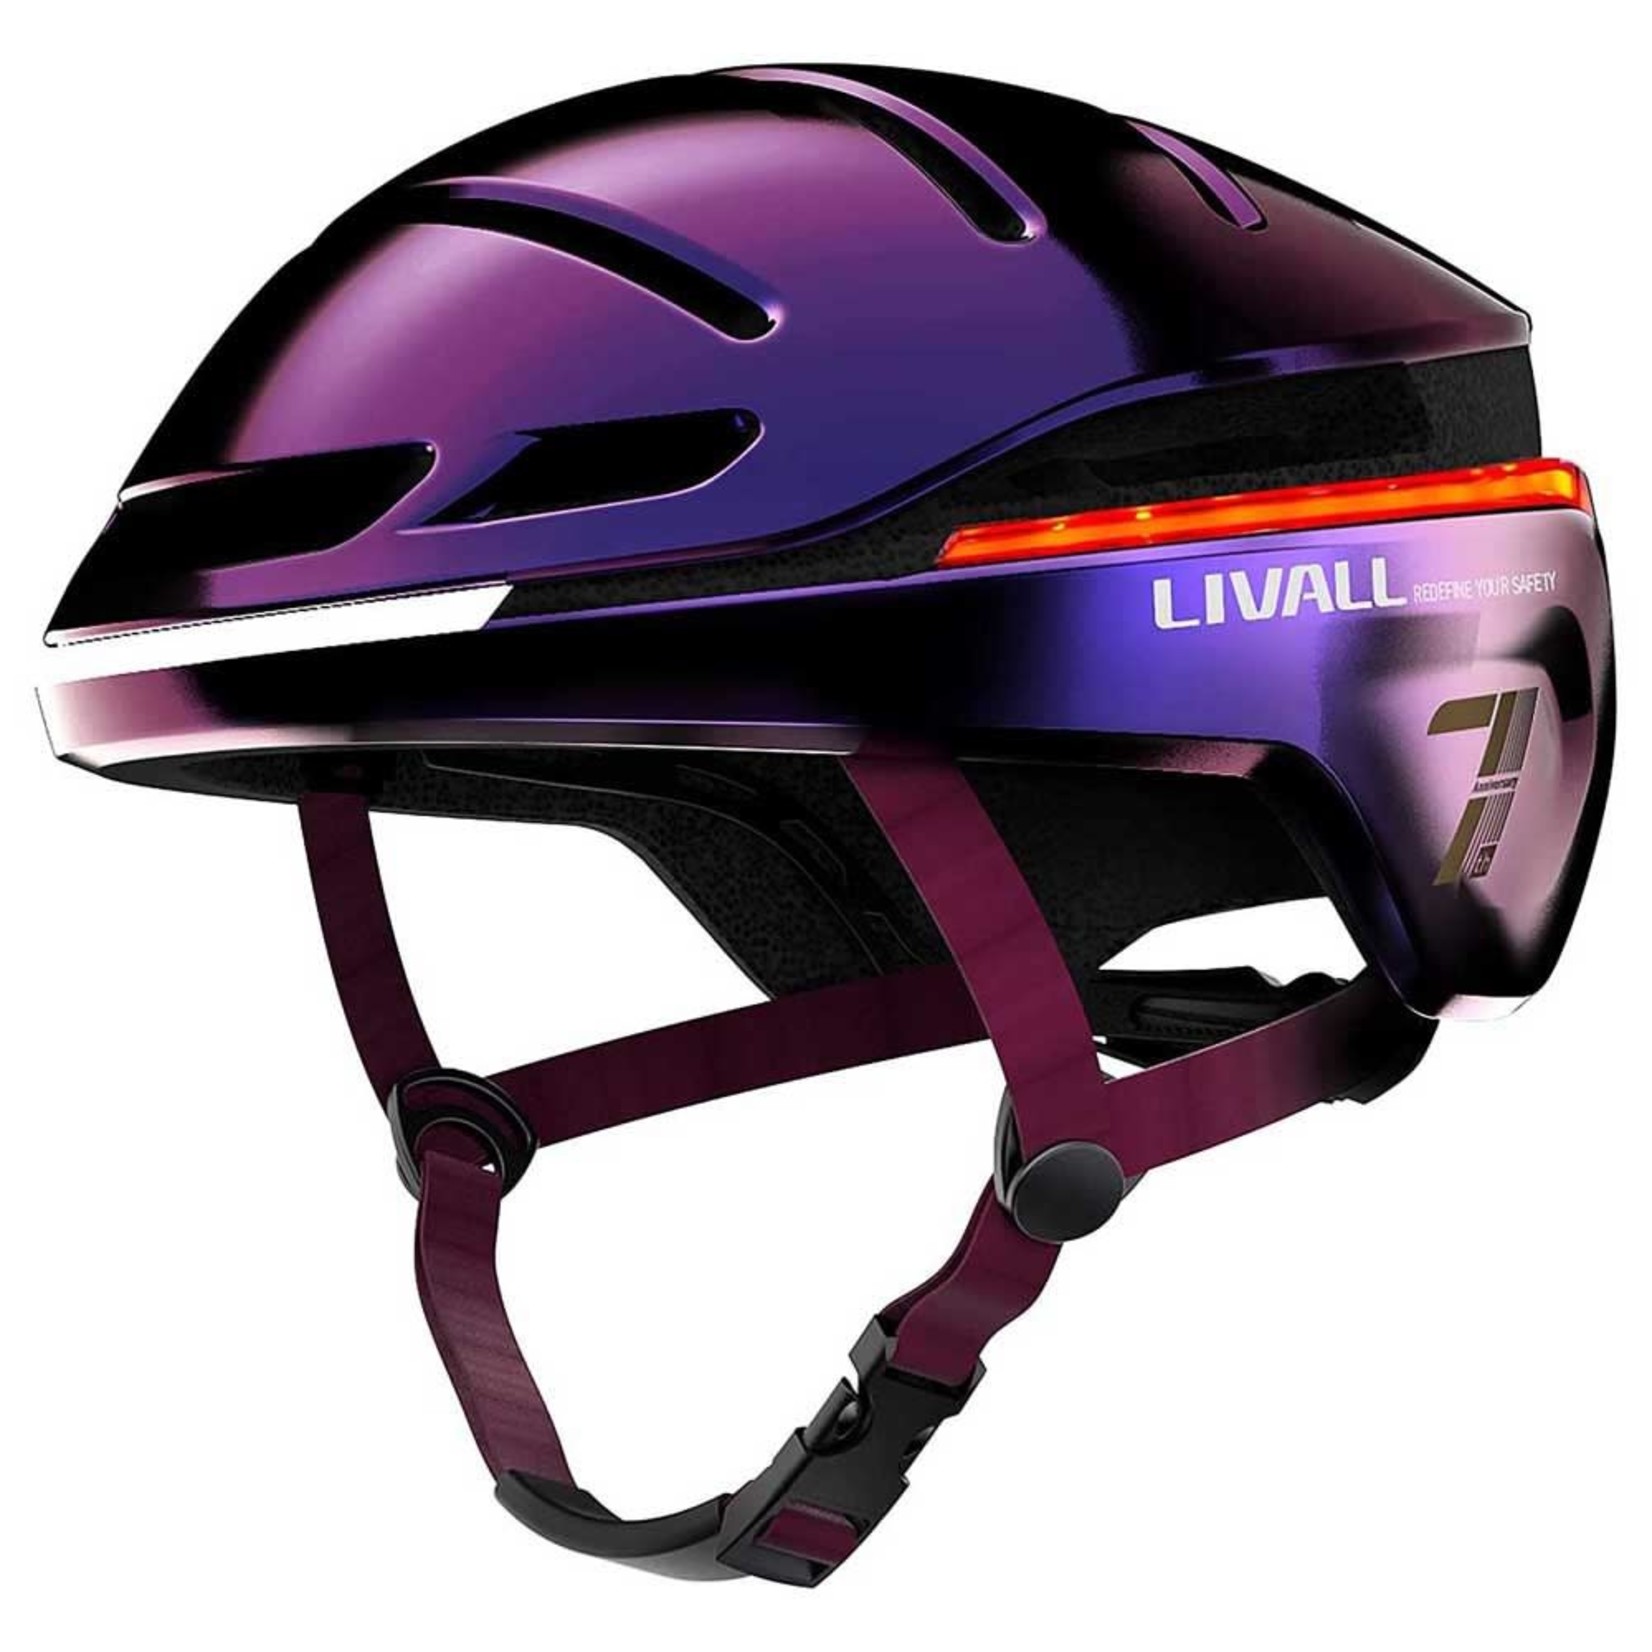 Livall Livall EVO21 Smart Helmet